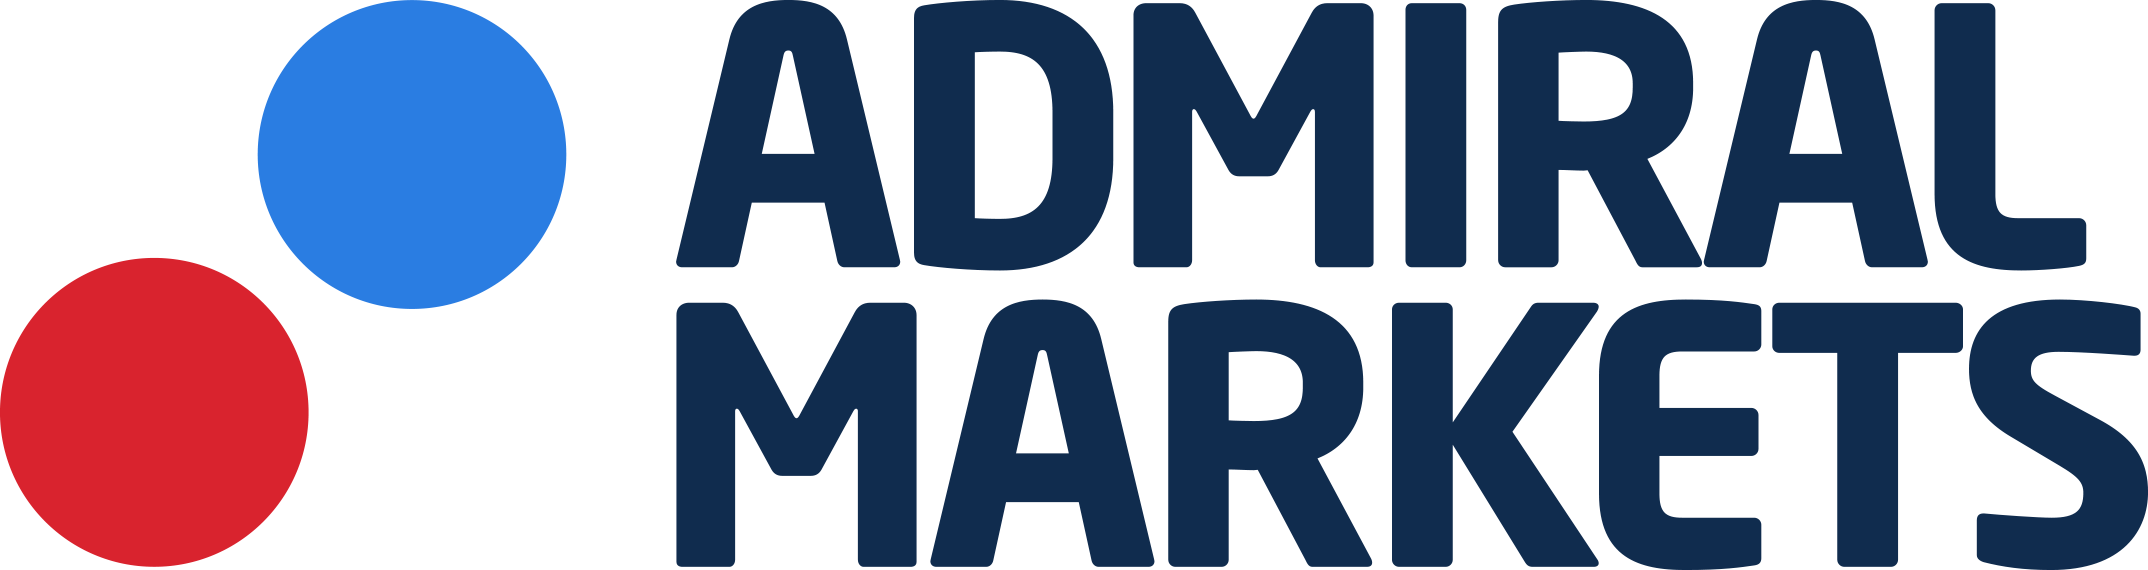 Admiral-Markets-Logo.png